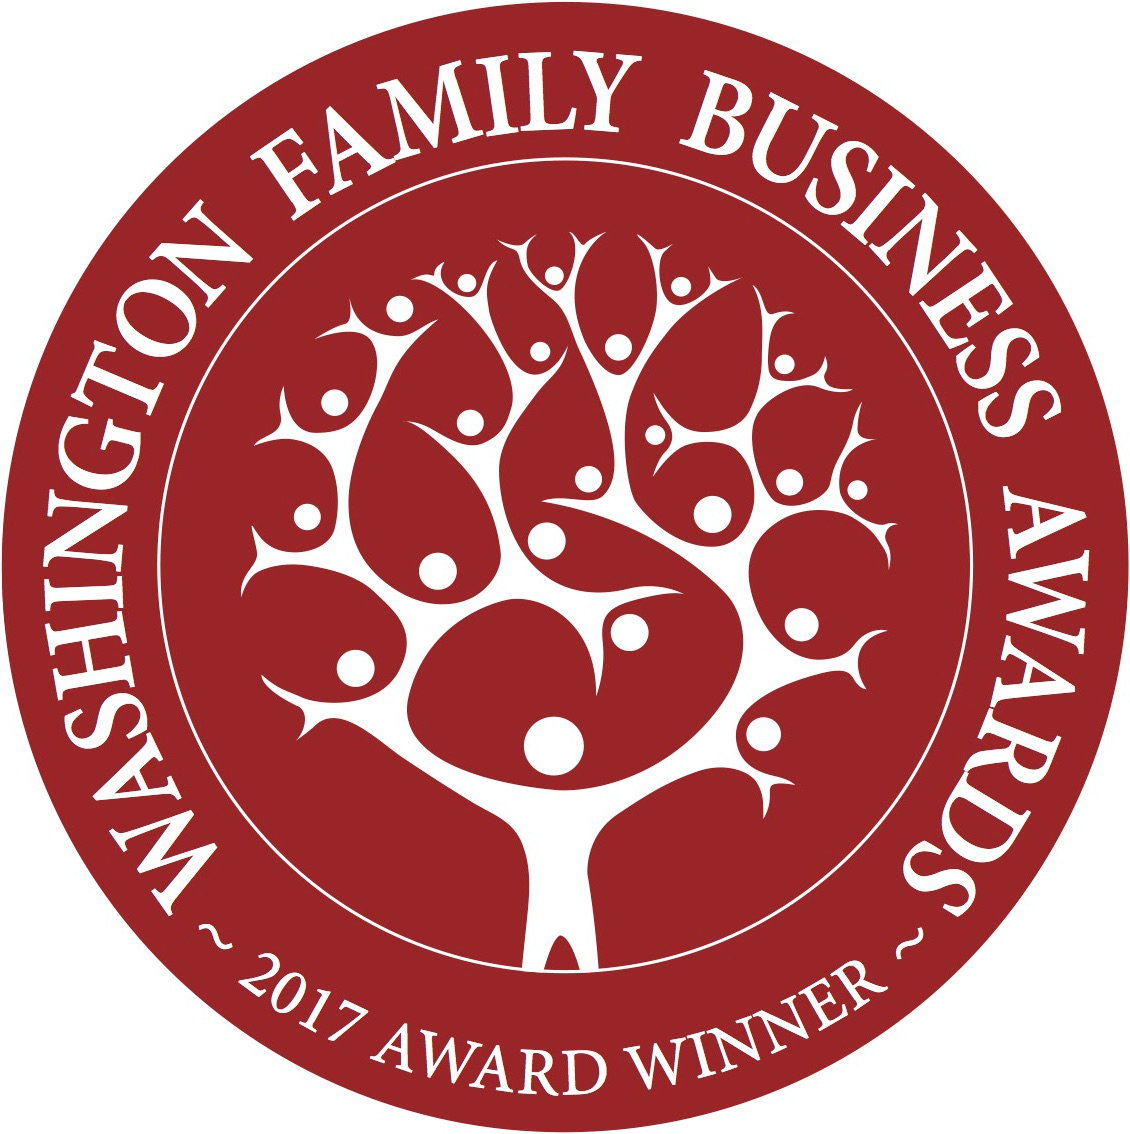 2017 Family Business Award